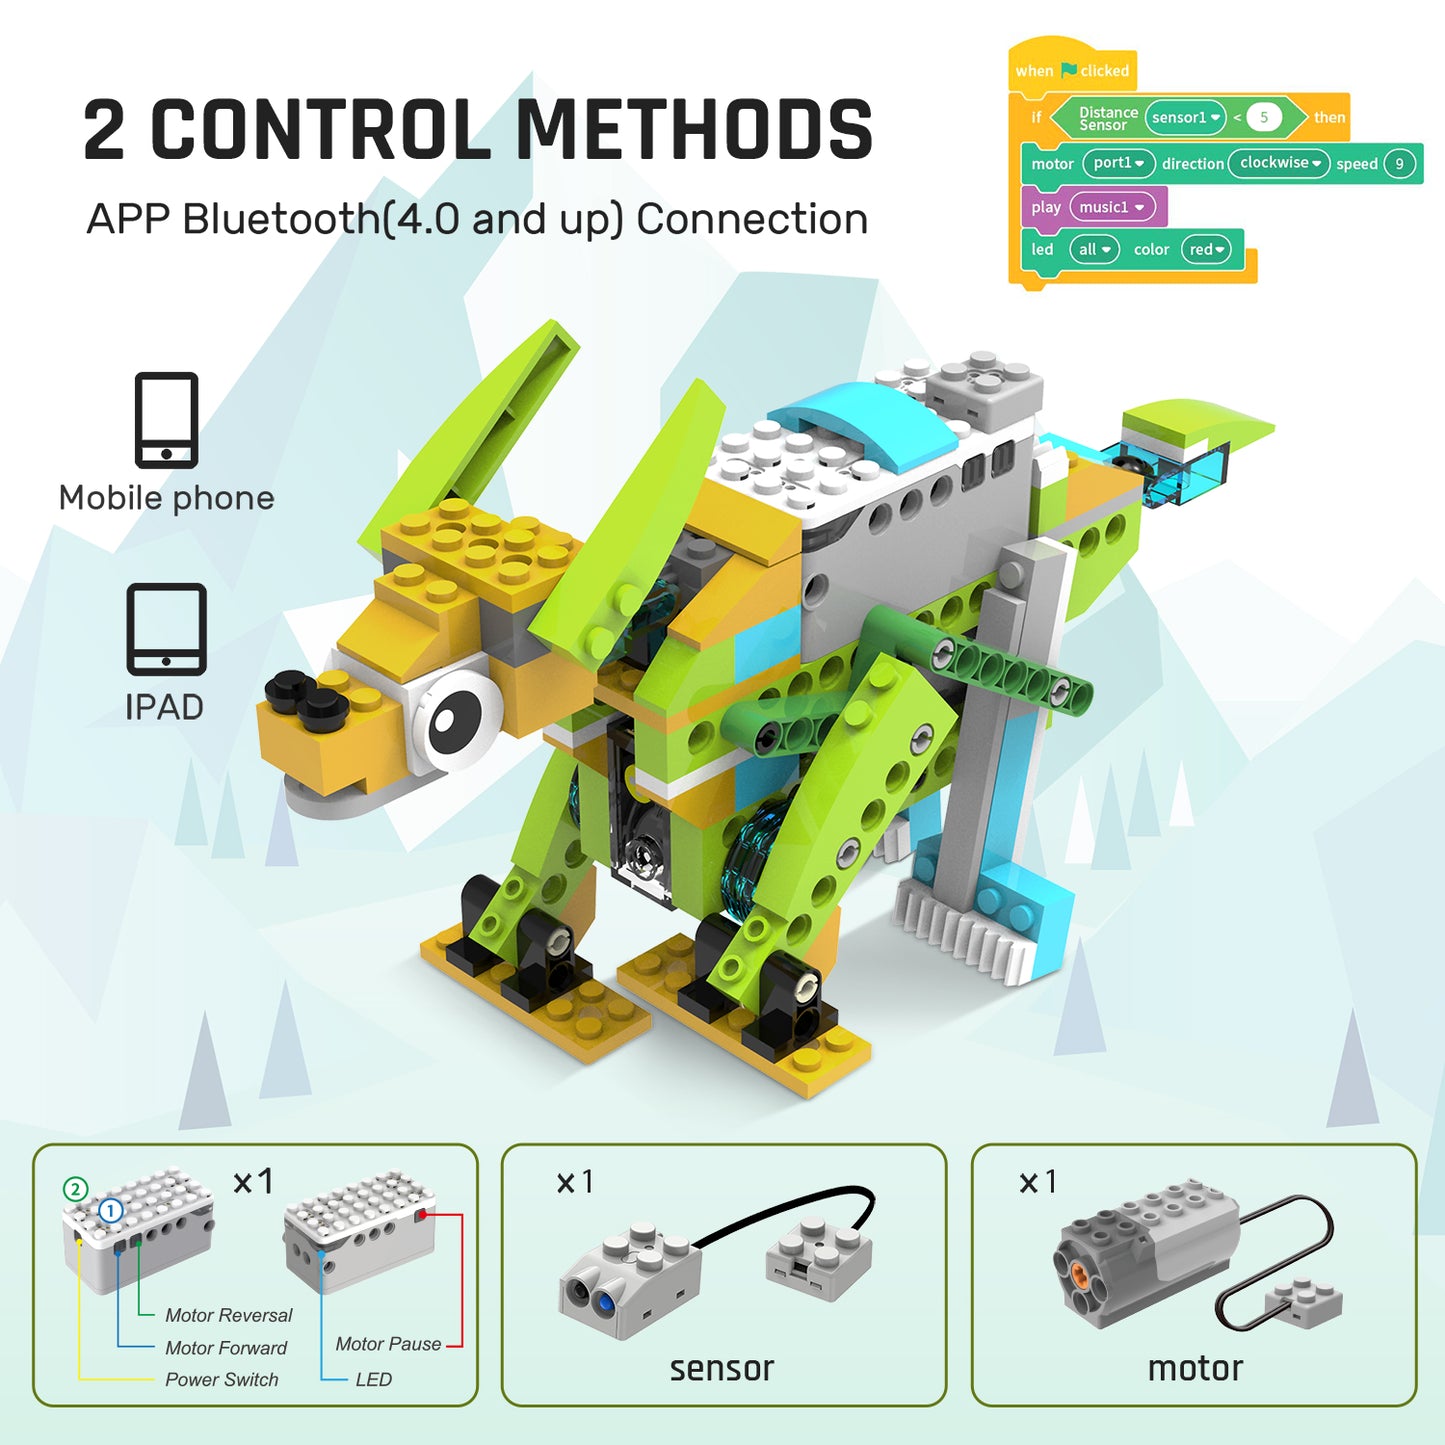 Makerzoid Coding Robot Kits, 26 in 1 Set - App Controlled Stem Educational Toy, Superbot DIY Building Set, Programmable Robotics